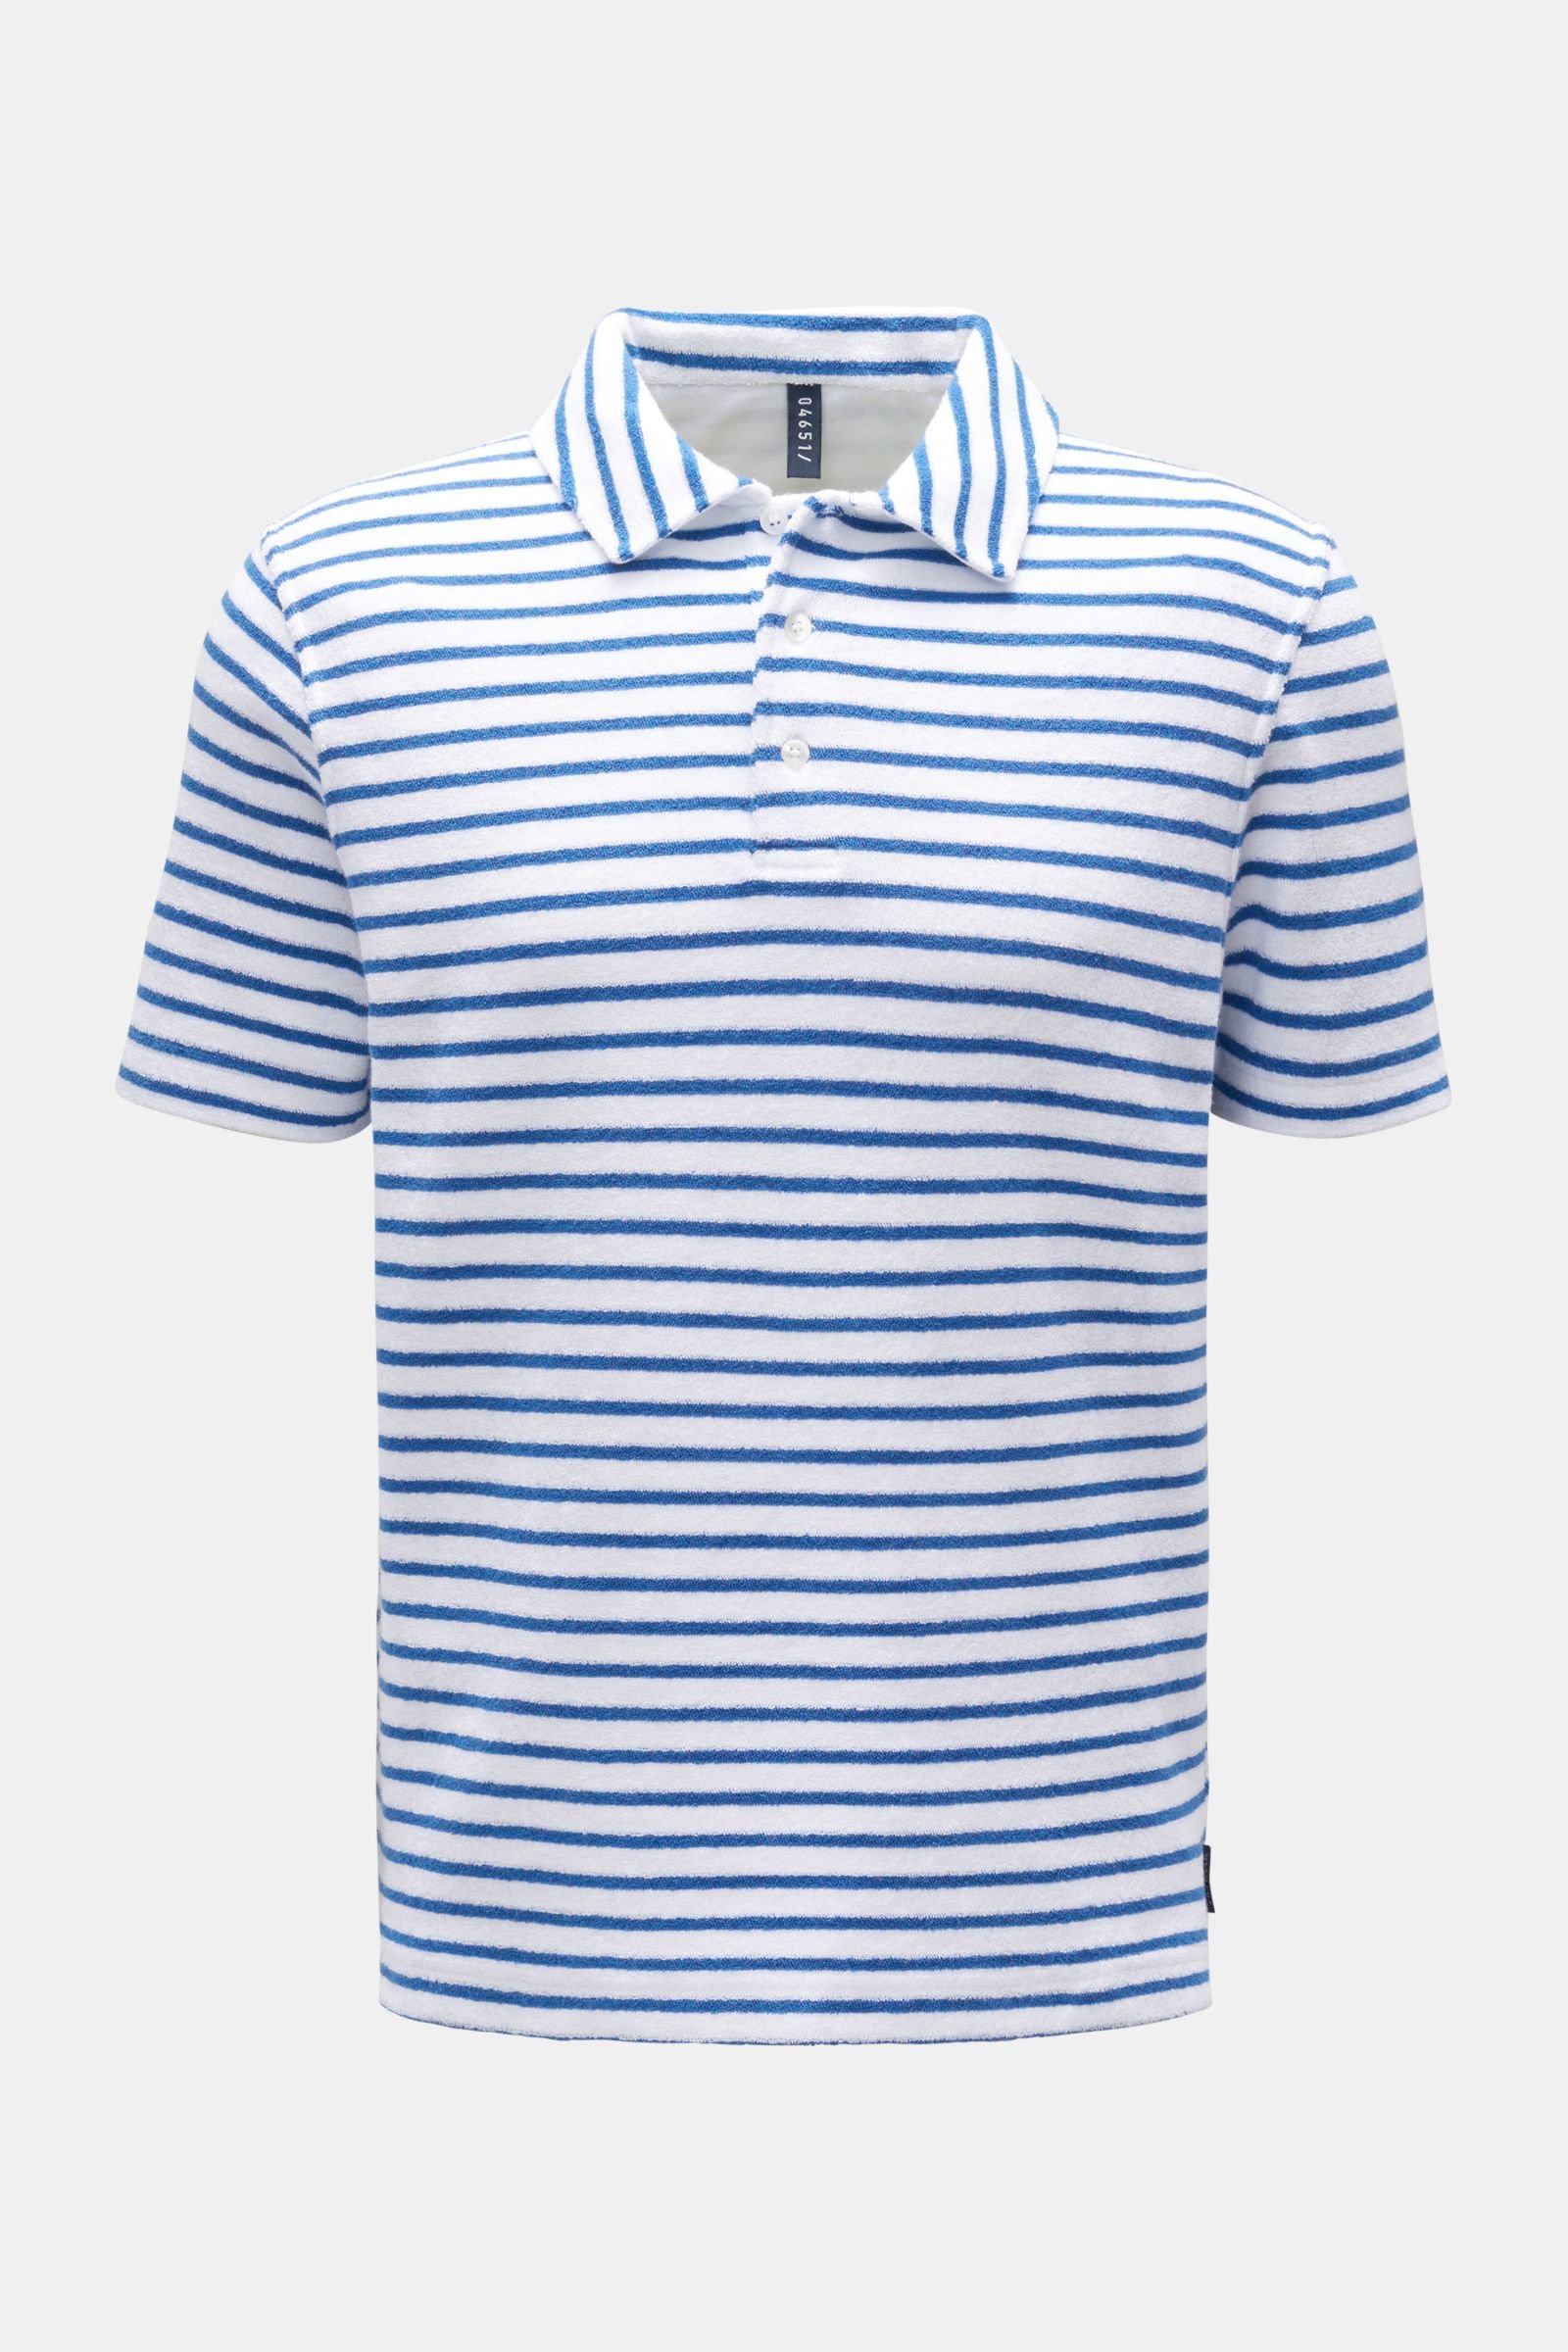 Frottee-Poloshirt 'Terry Stripe Polo' blau/weiß gestreift